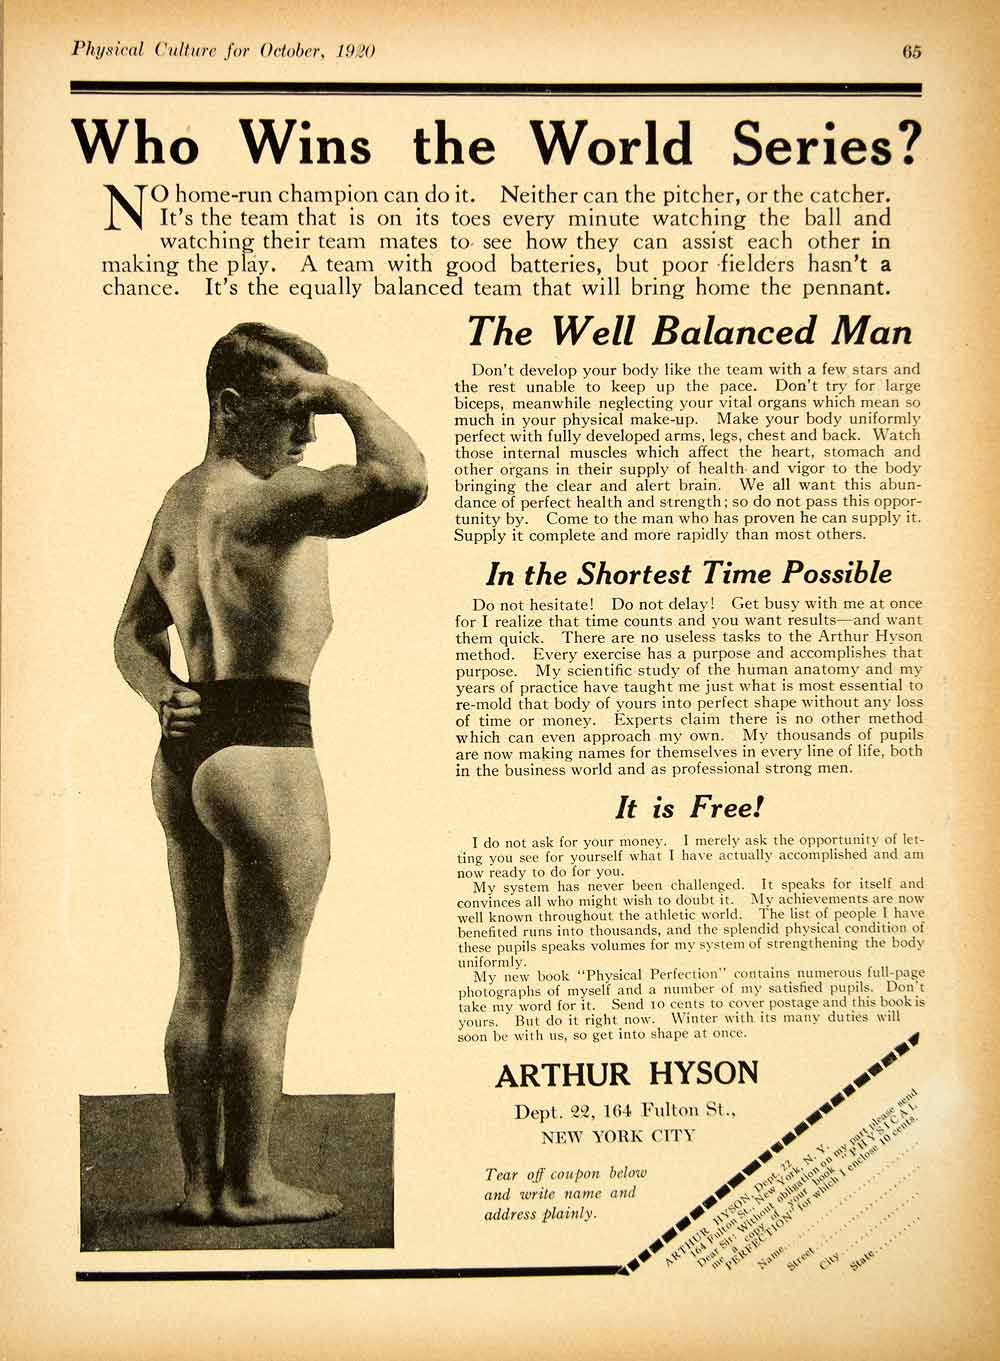 1920 Ad Arthur Hyson Dept 22 164 Fulton St New York Athlete Physical YPC1